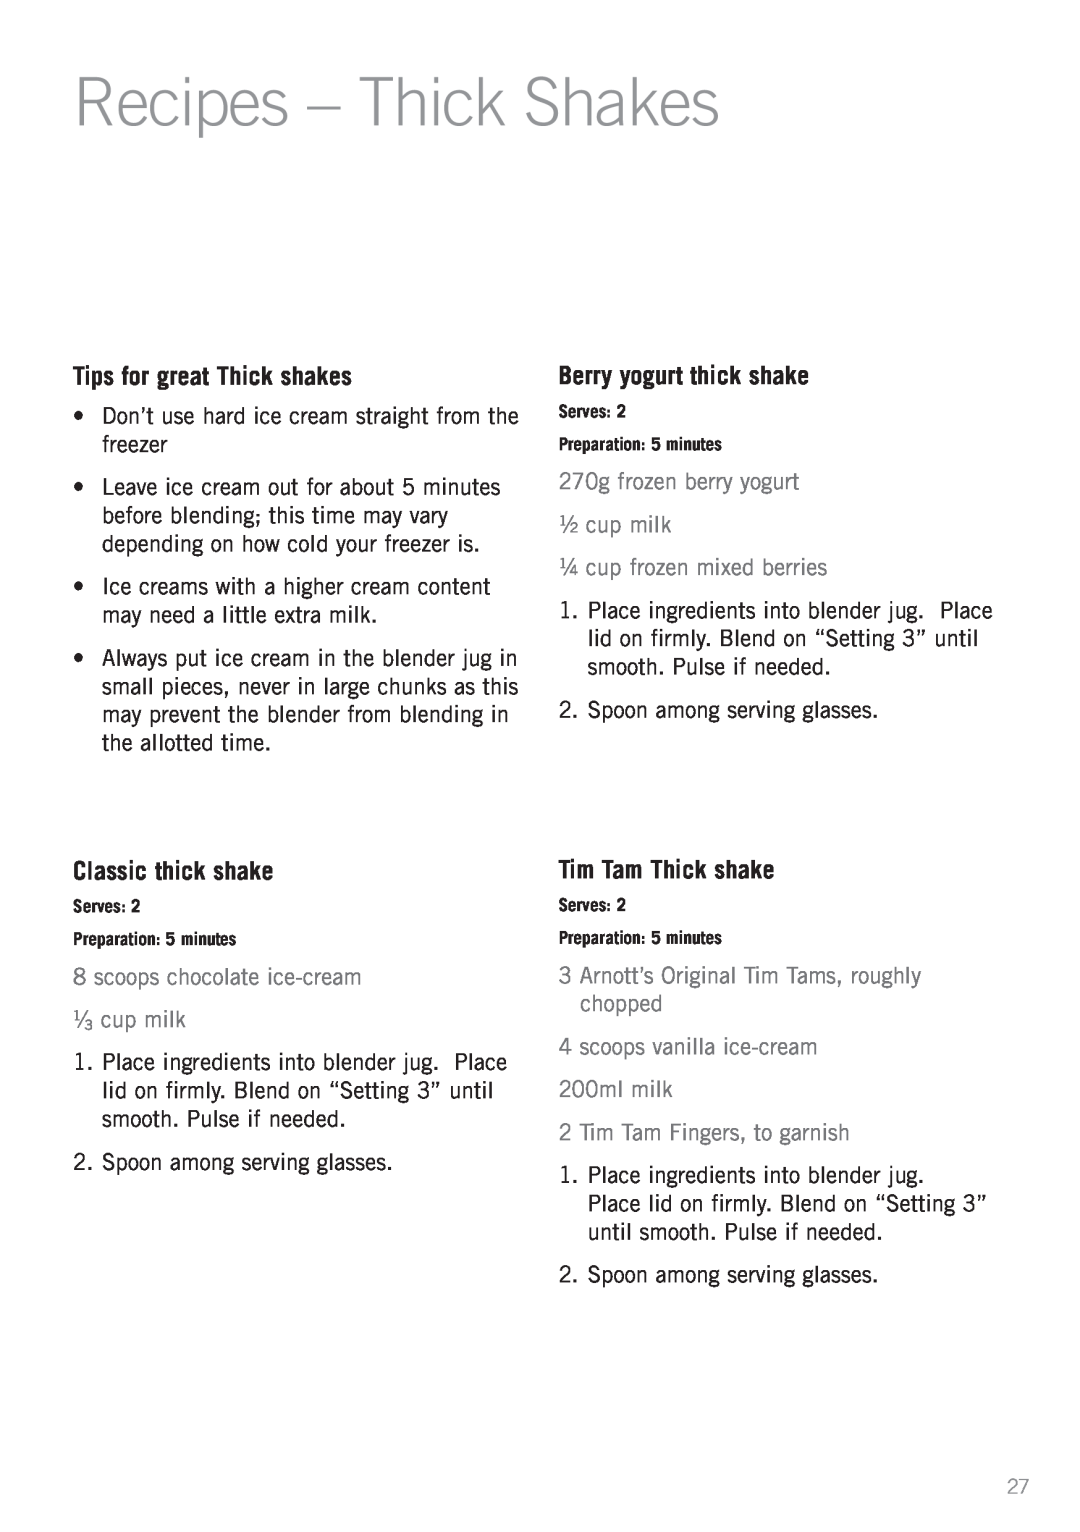 Sunbeam PB7650 manual Recipes - Thick Shakes, Tips for great Thick shakes, Berry yogurt thick shake, Classic thick shake 